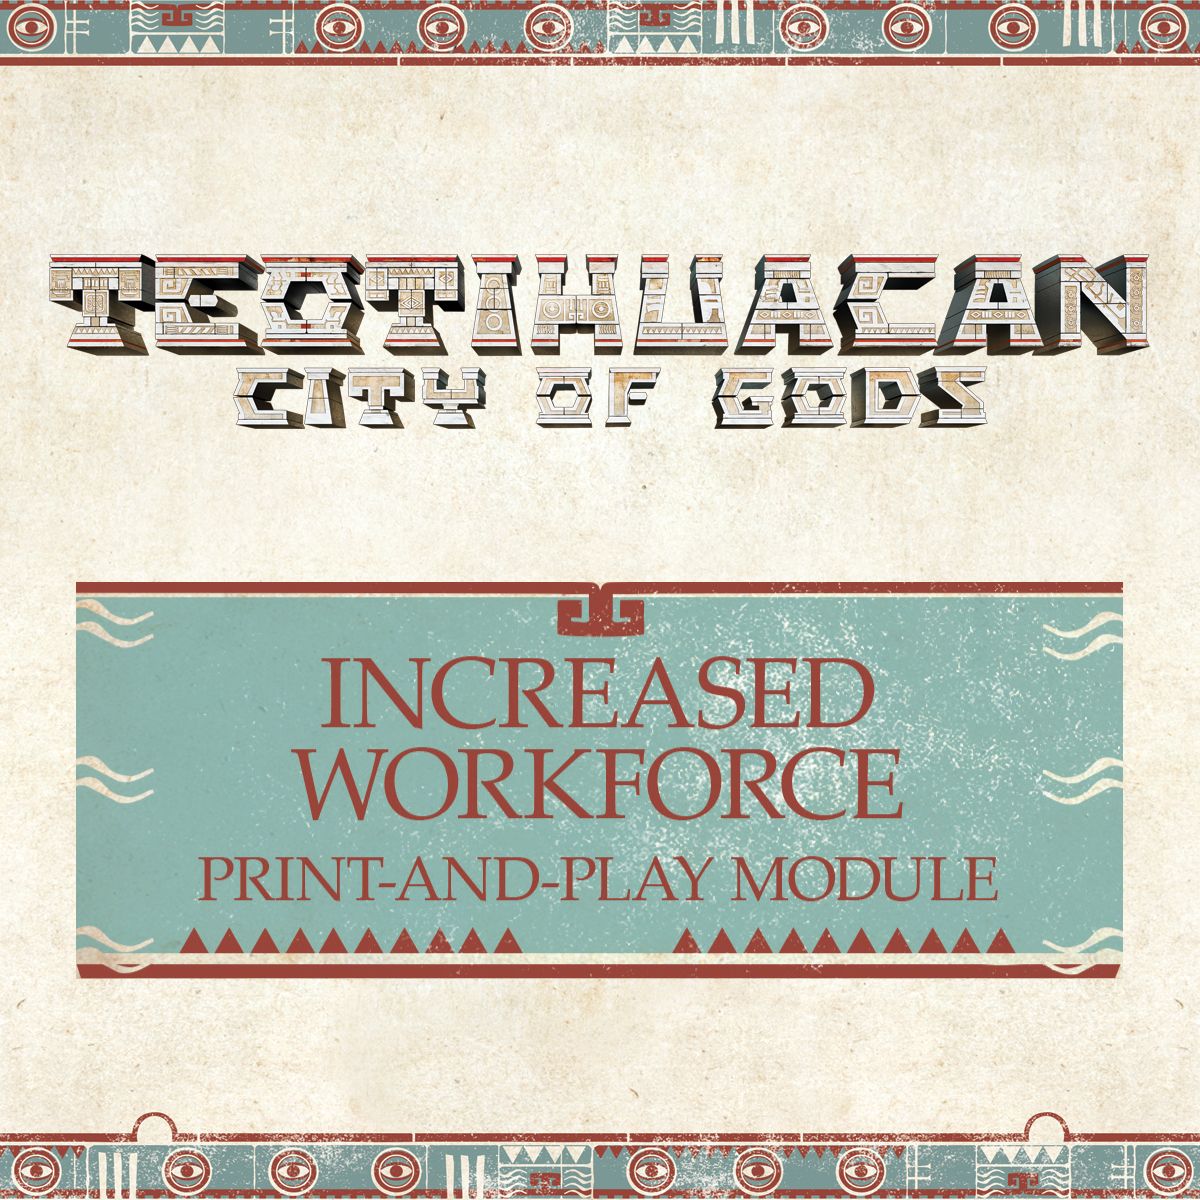 Teotihuacan: City of Gods – Increased Workforce